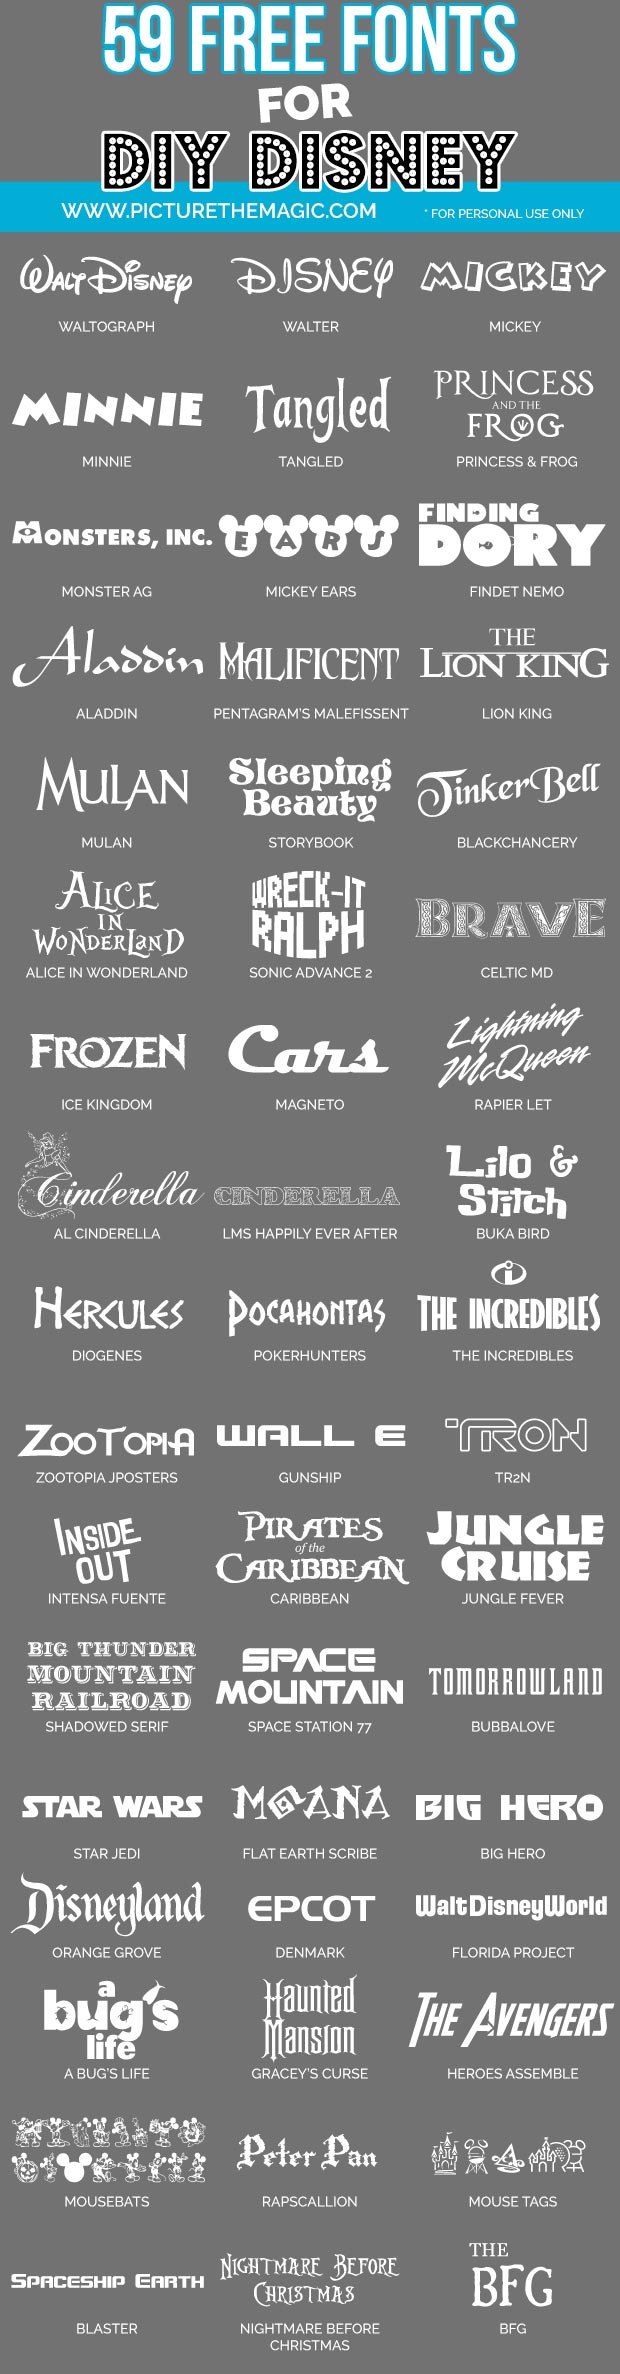 UPDATED] 59 Free Disney Fonts